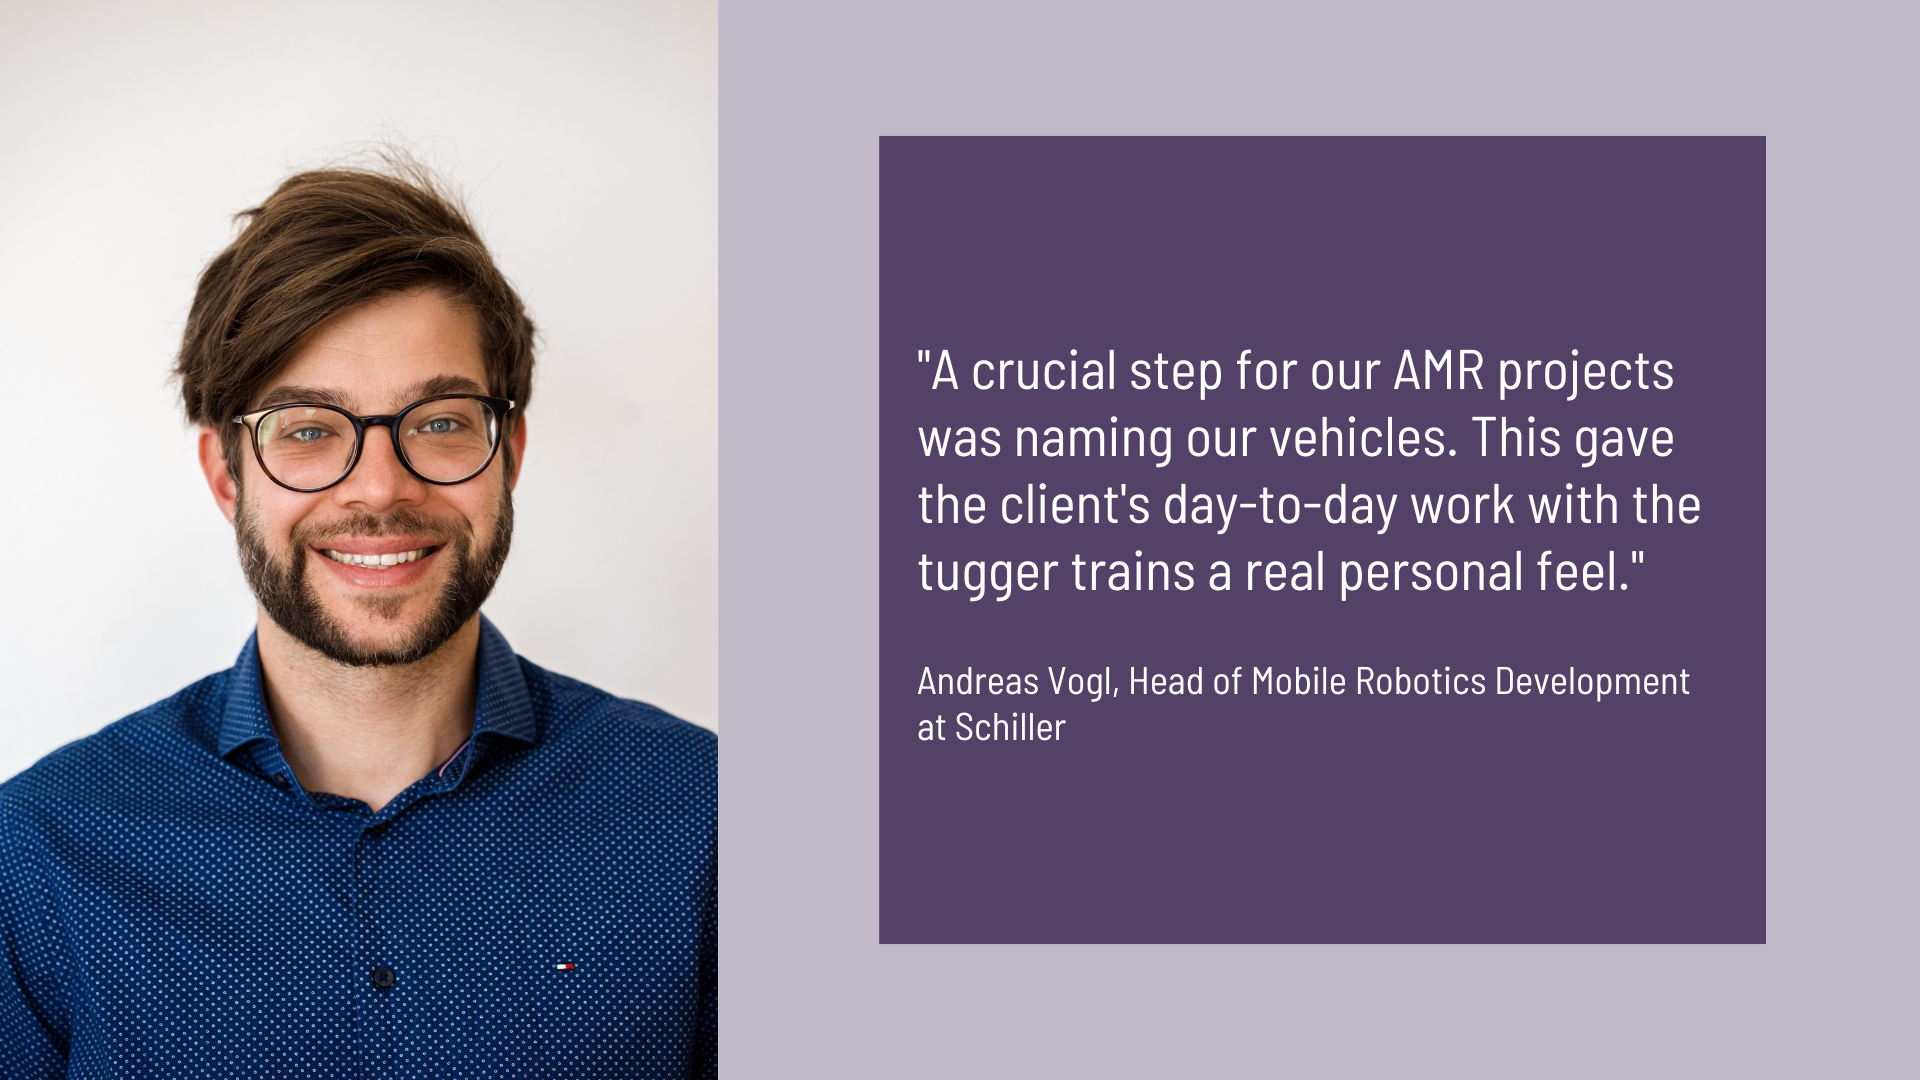 Andreas Vogl, Head of Mobile Robotics Development at Schiller